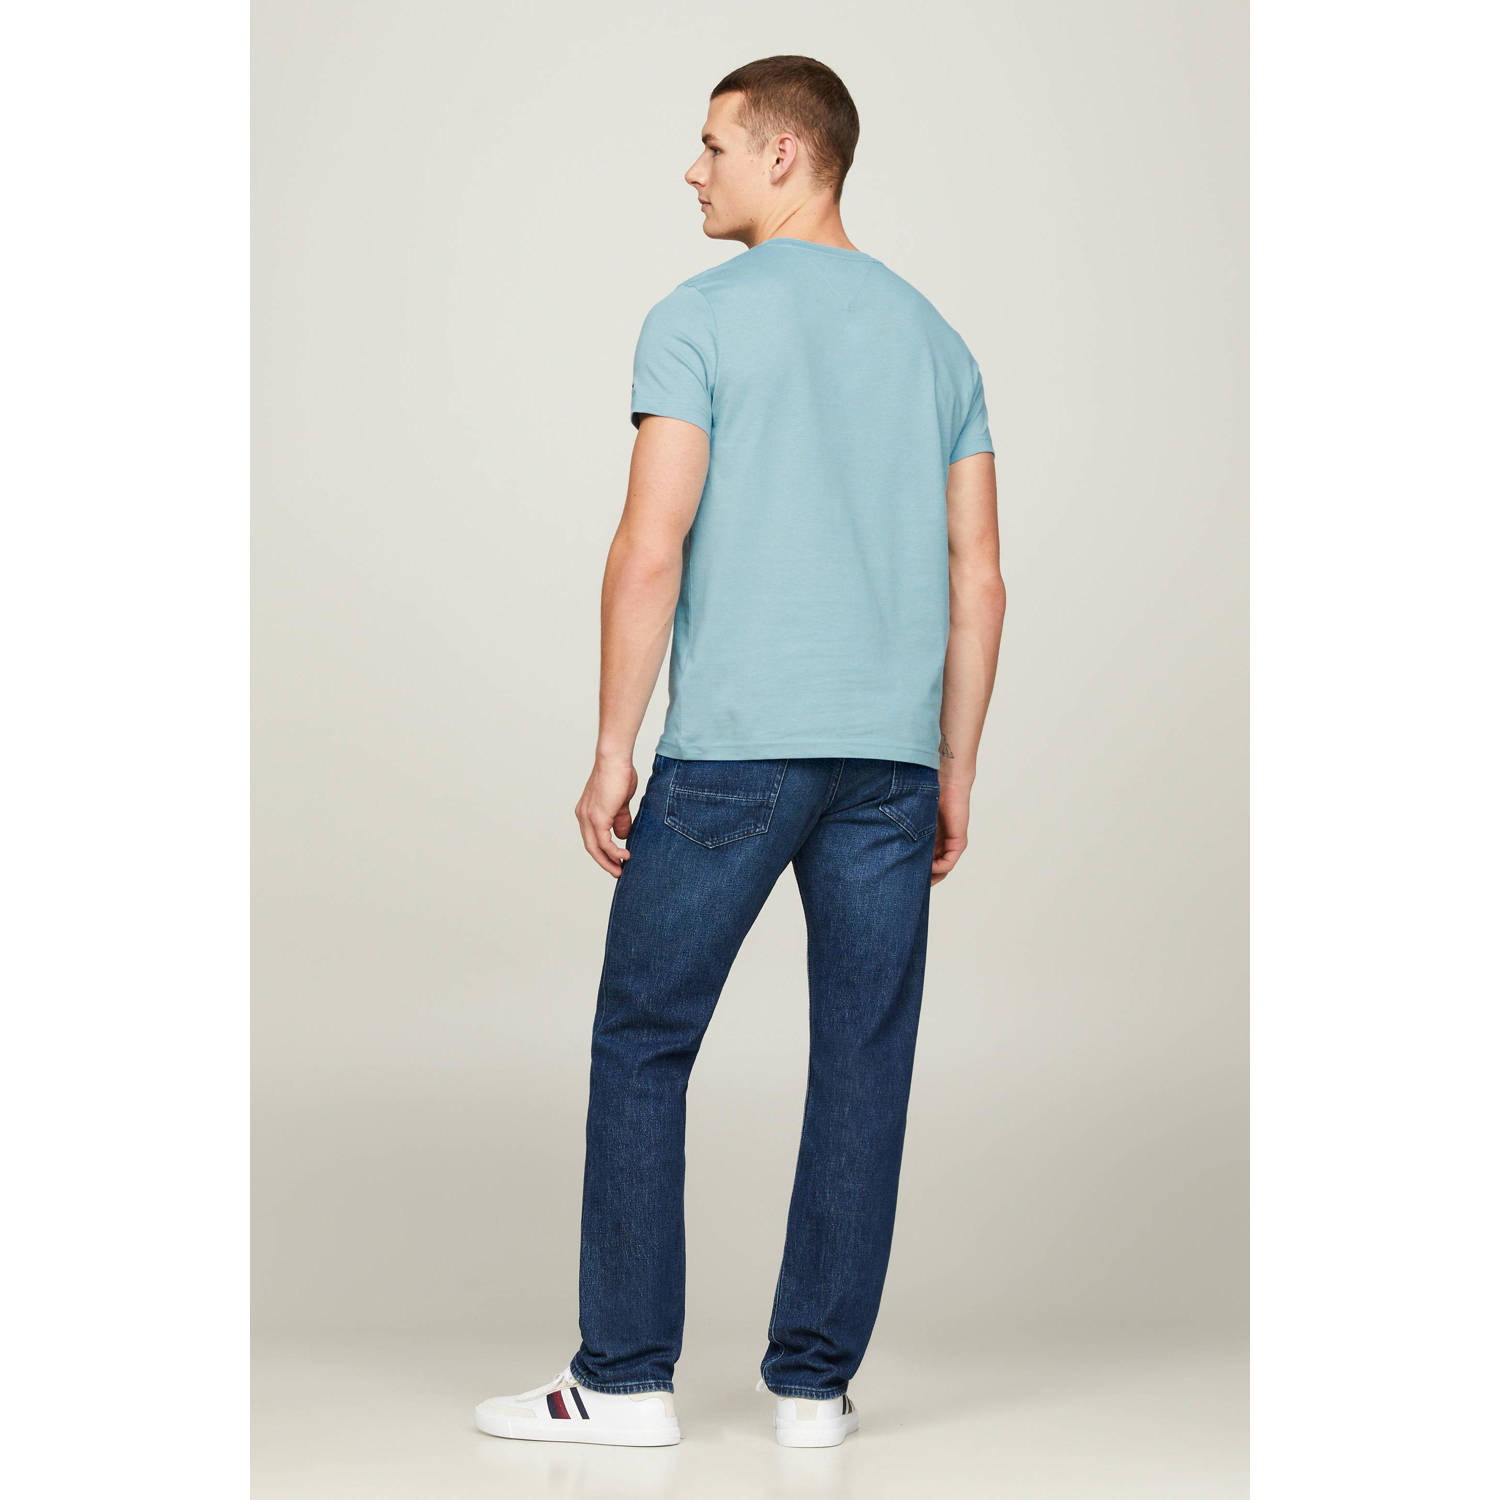 Tommy Hilfiger slim fit T-shirt met printopdruk sleepy blue